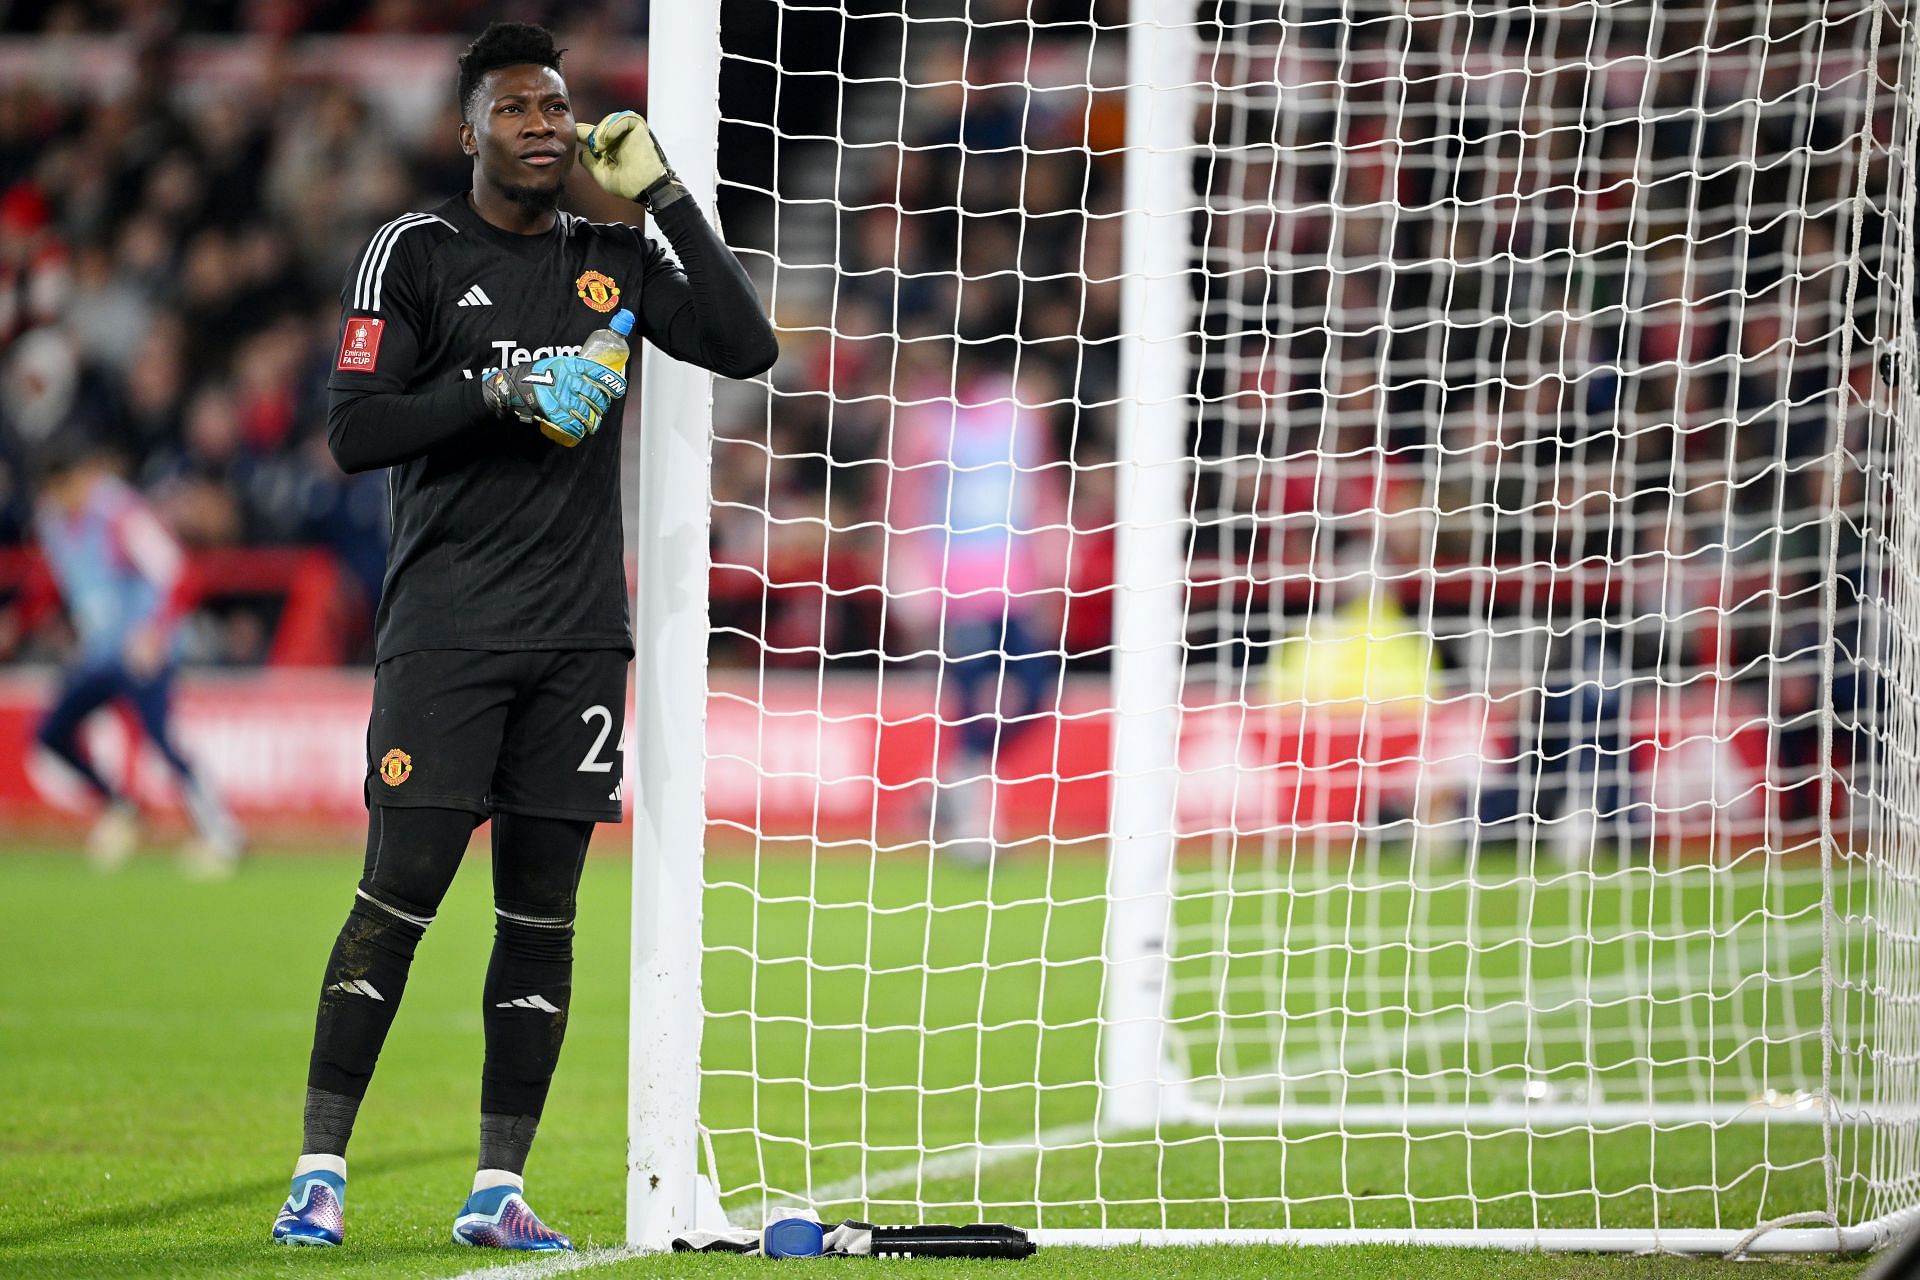 Andre Onana has endured a shaky start to life at Manchester United.